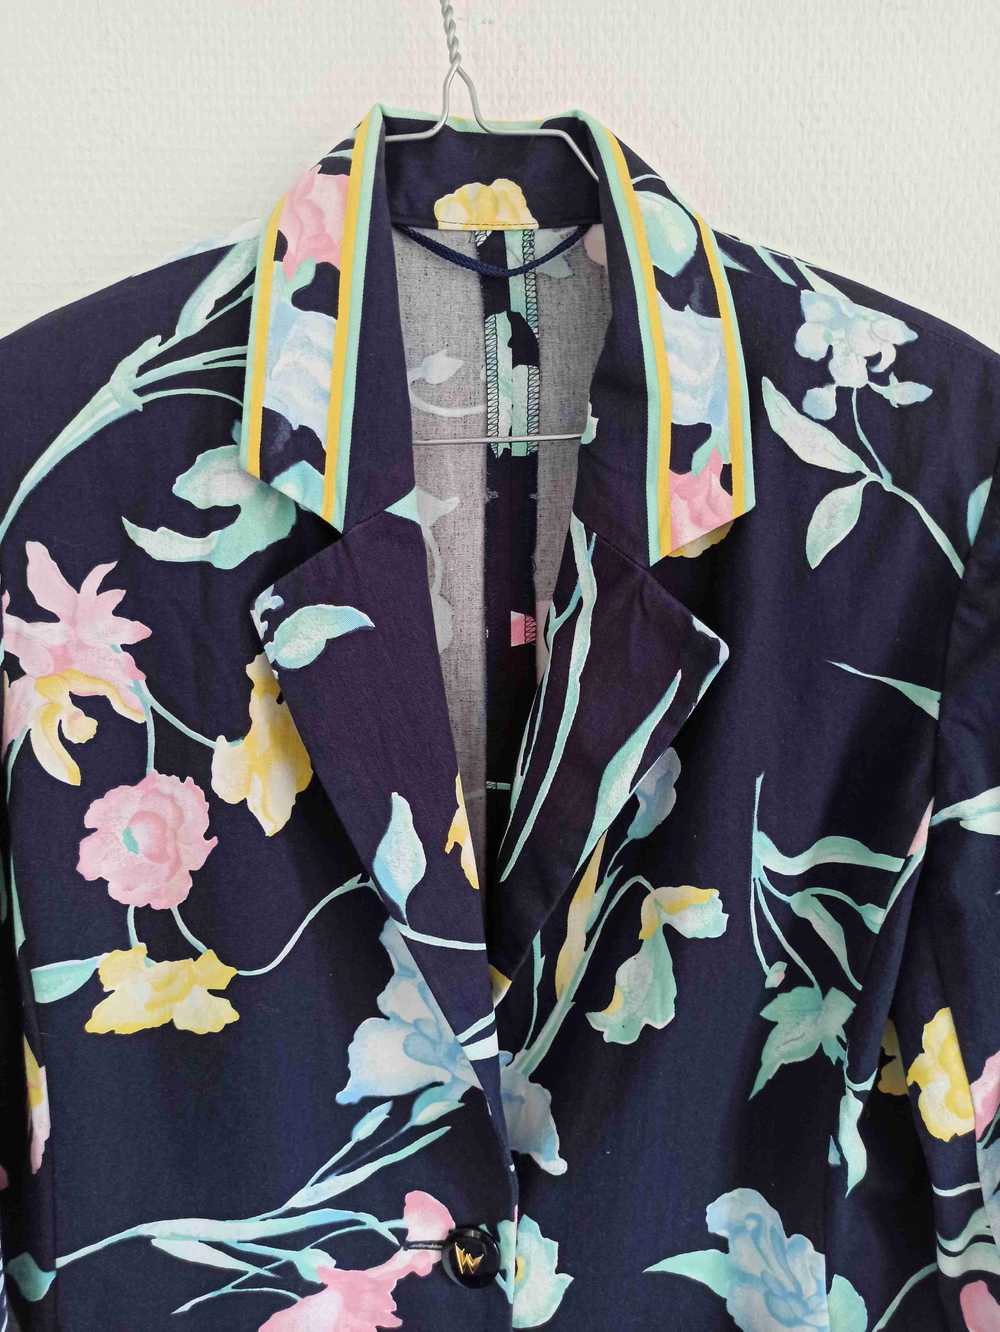 Floral blazer - Blazer with large flowers, navy b… - image 5